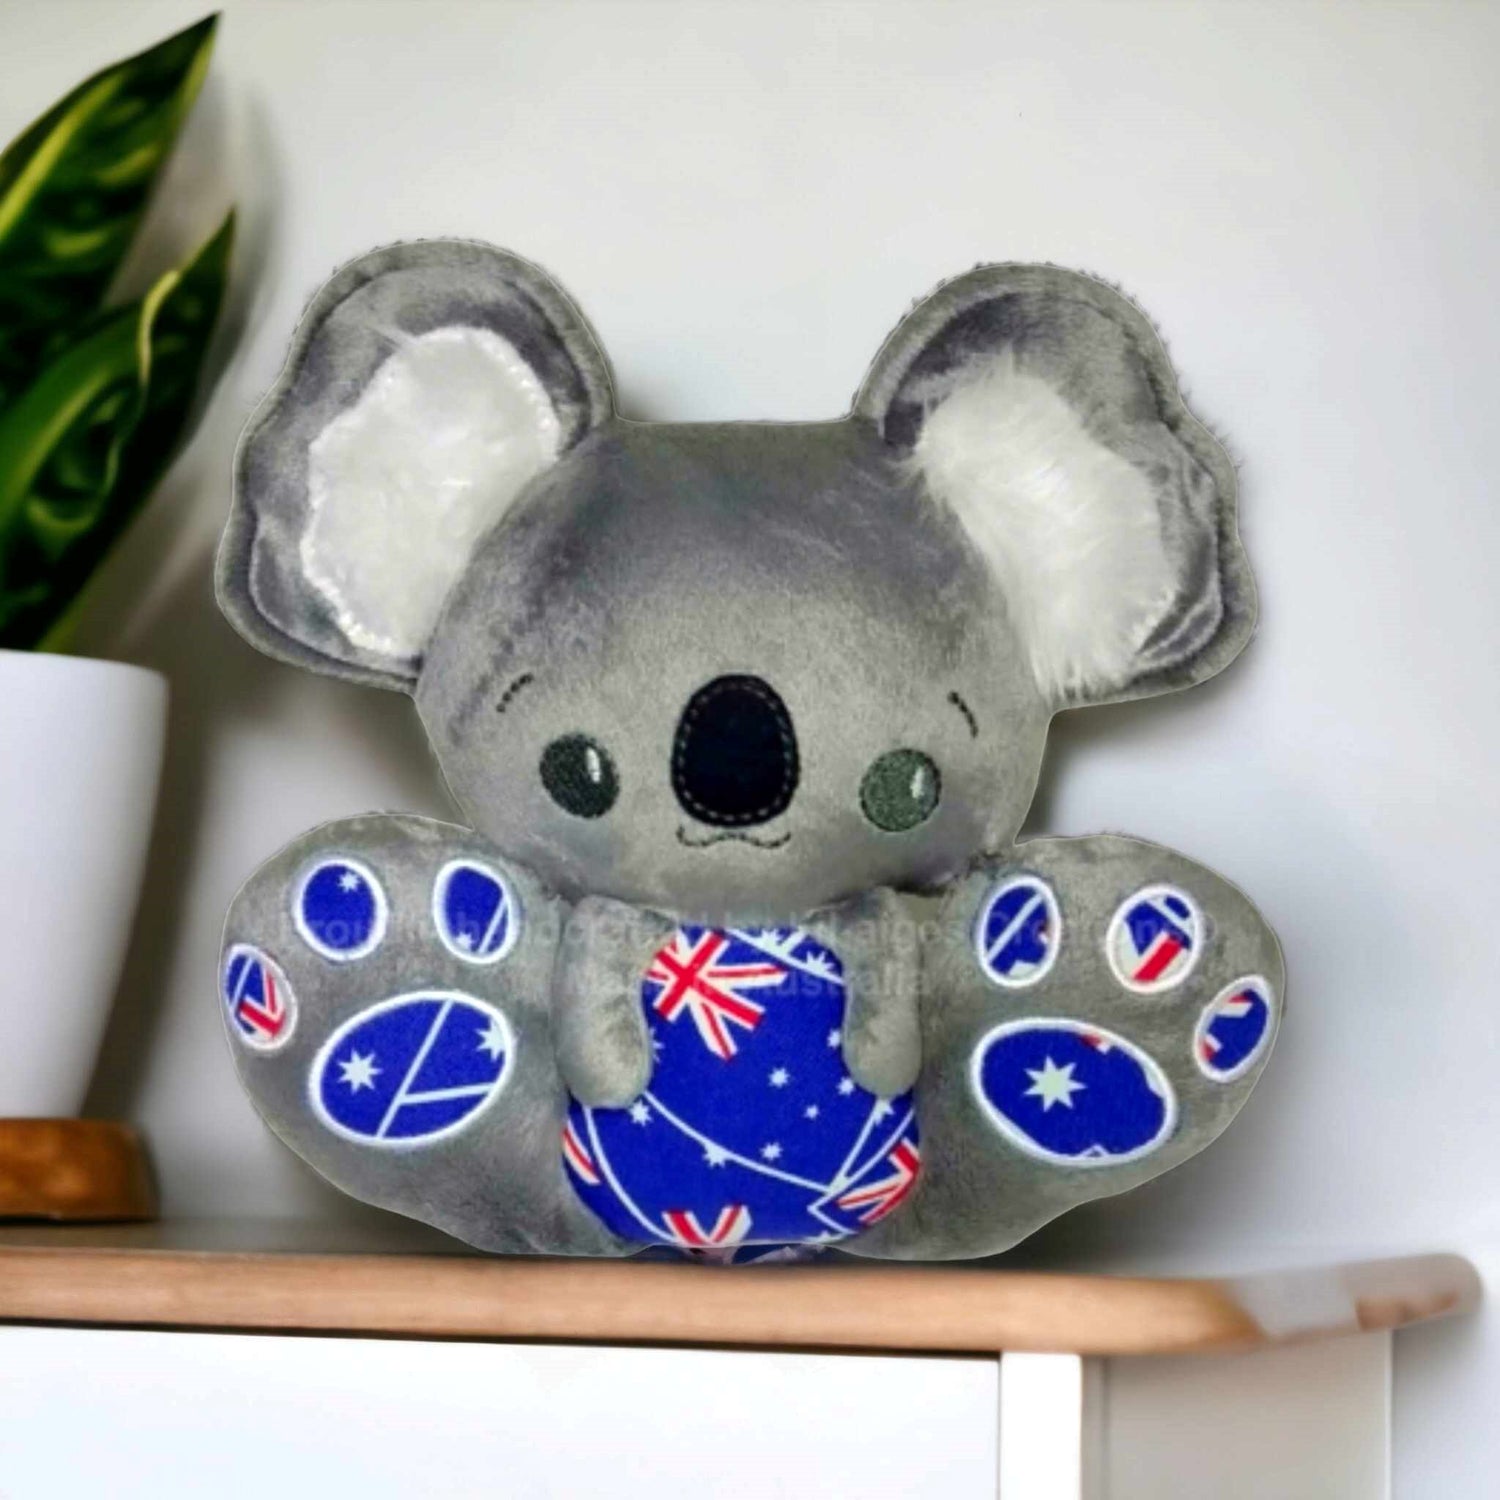 Cute made in Australia koala plush toy with Australian Flag applique on tummy and feet pads. 